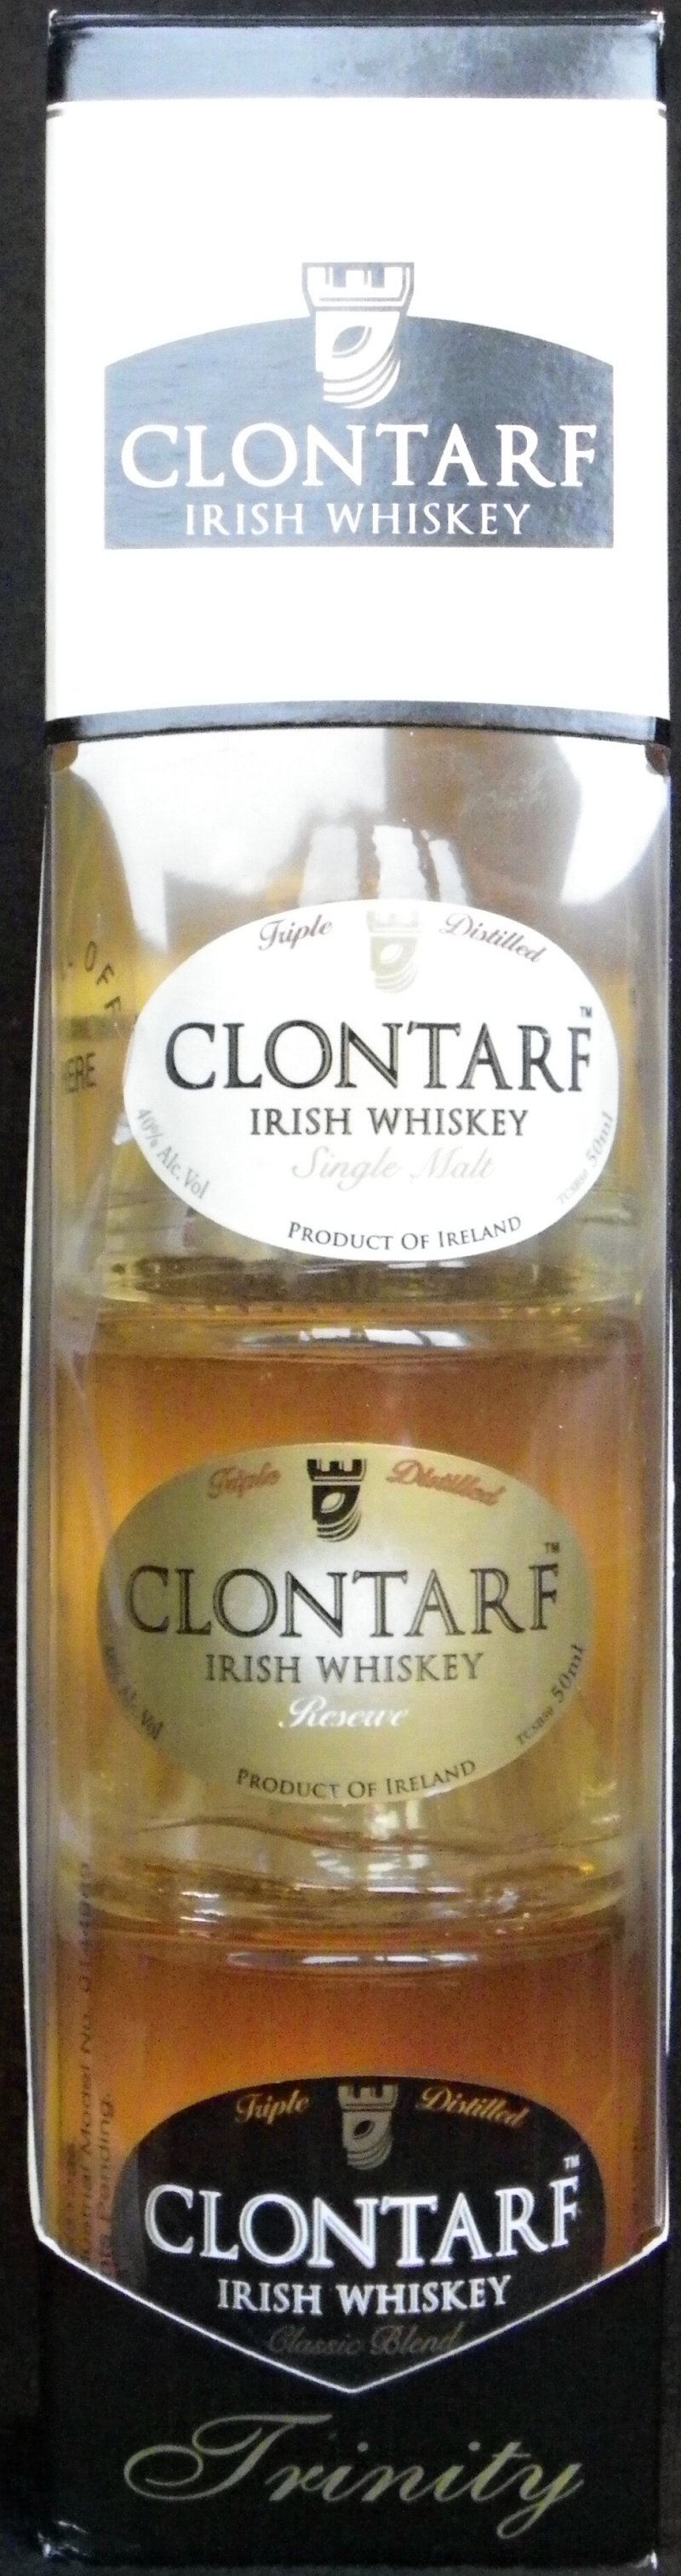 Clontarf
irish whiskey
Trinity
agen in bourbon barrels for unsurpassed quality
mellowed through atlantic irish oak charcoal